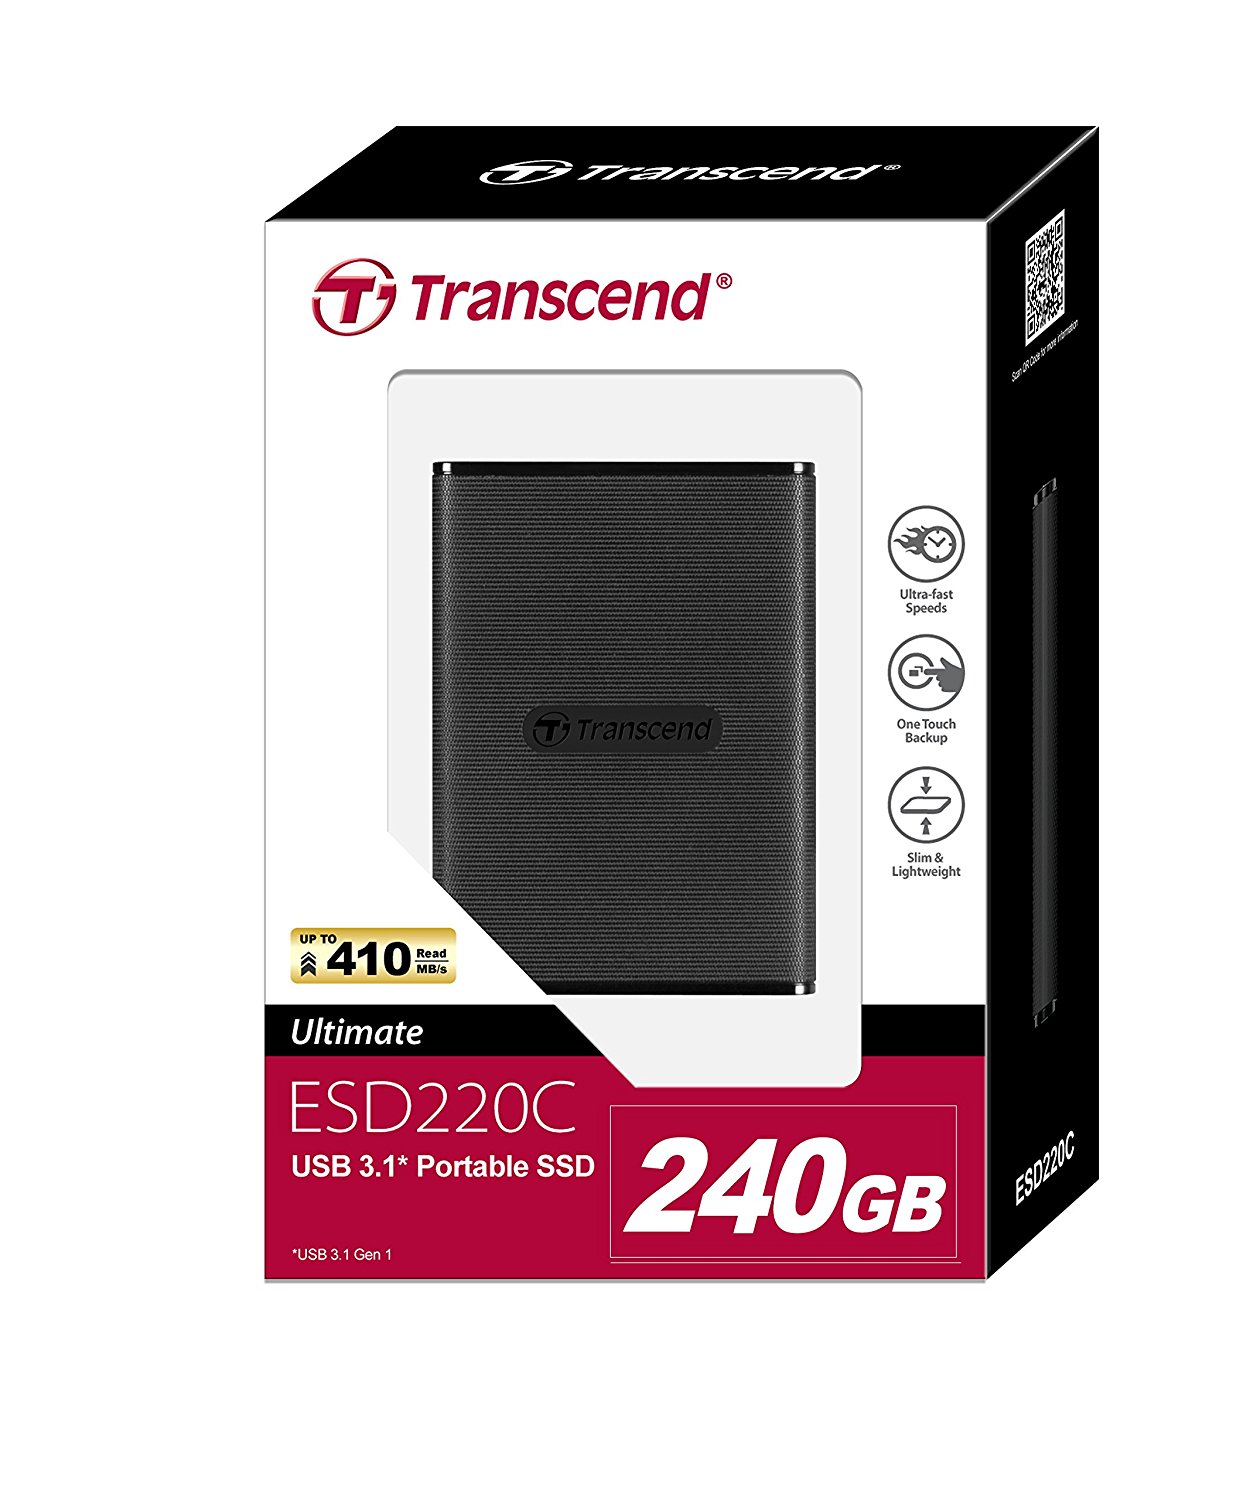 Transcend 240GB Portable SSD TLC USB 3.1, Black (TS240GESD220C)